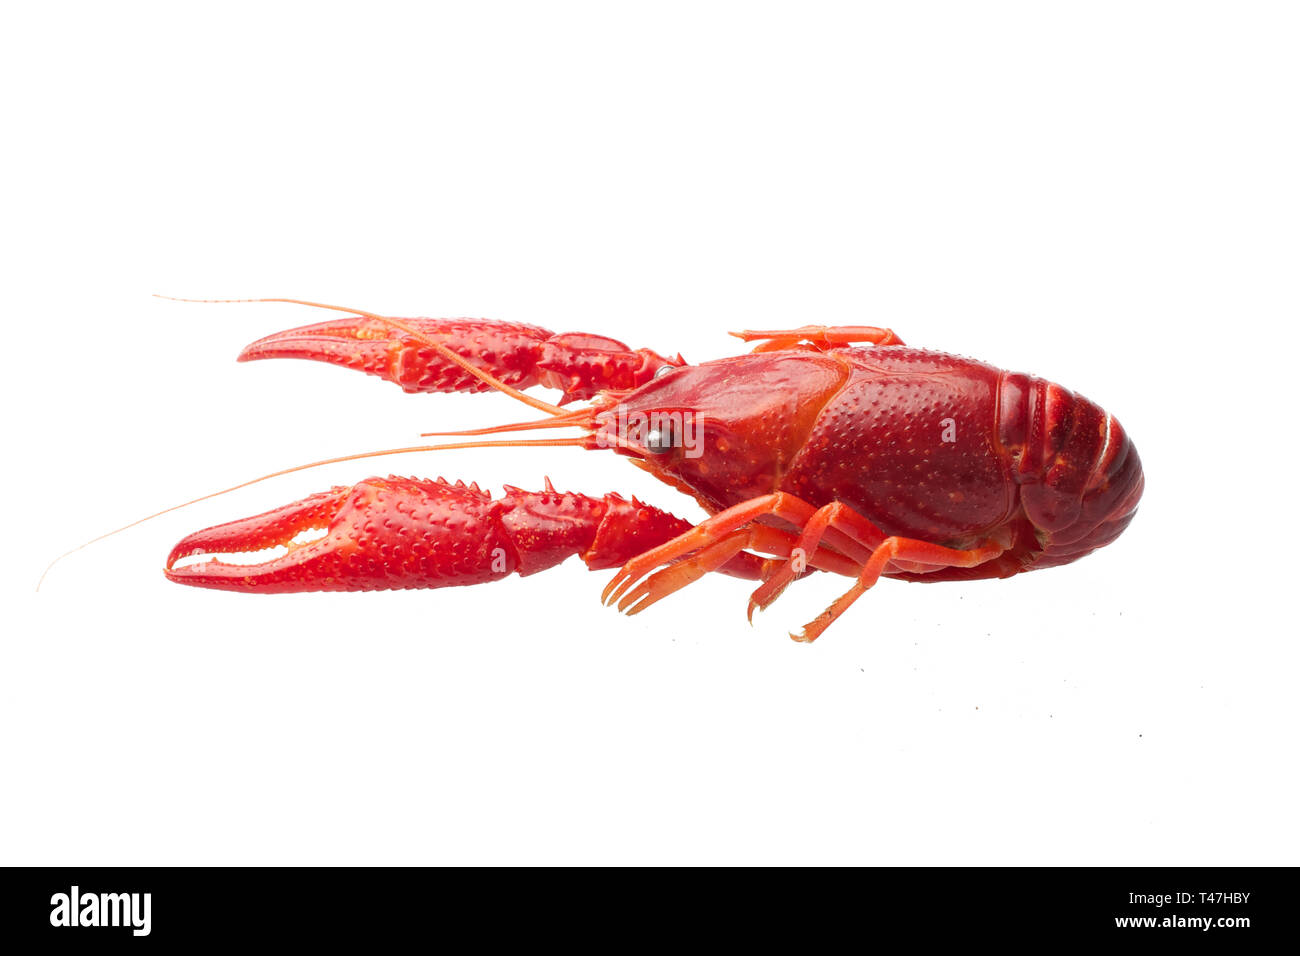 Boiled red crawfish isolated on white background Stock Photo